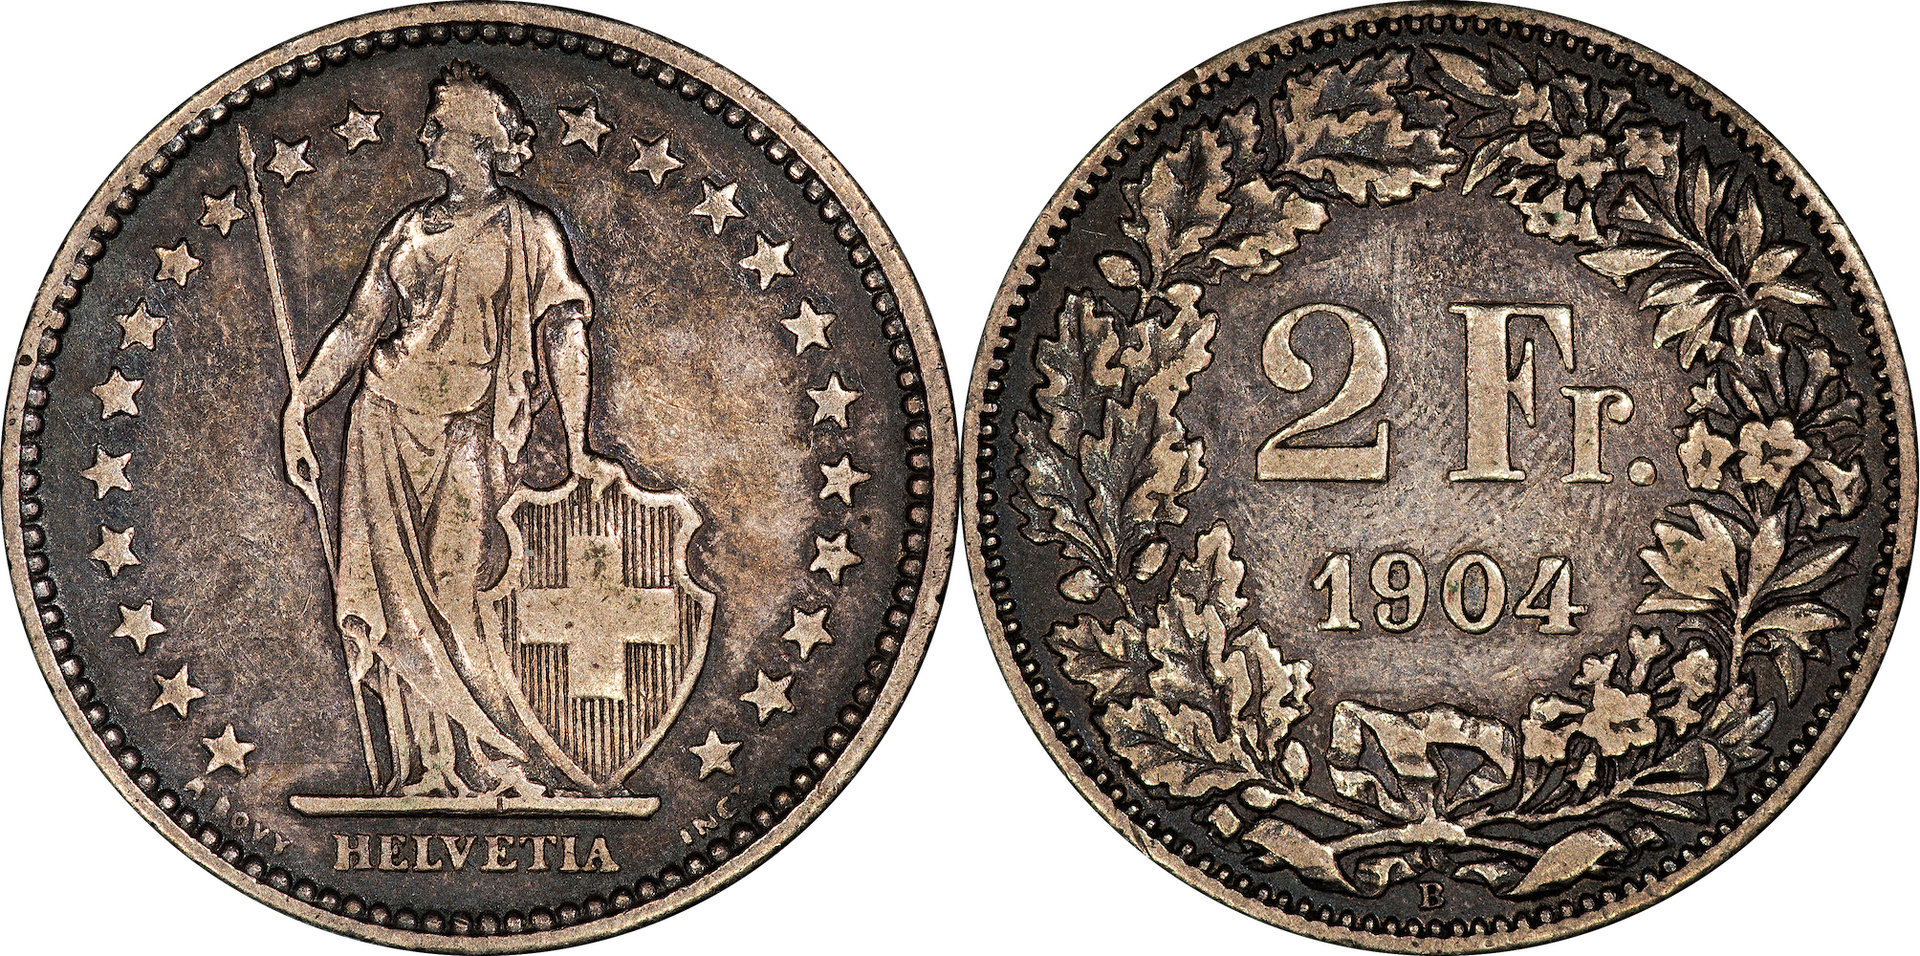 Switzerland - 1904 B 2 Francs.jpg